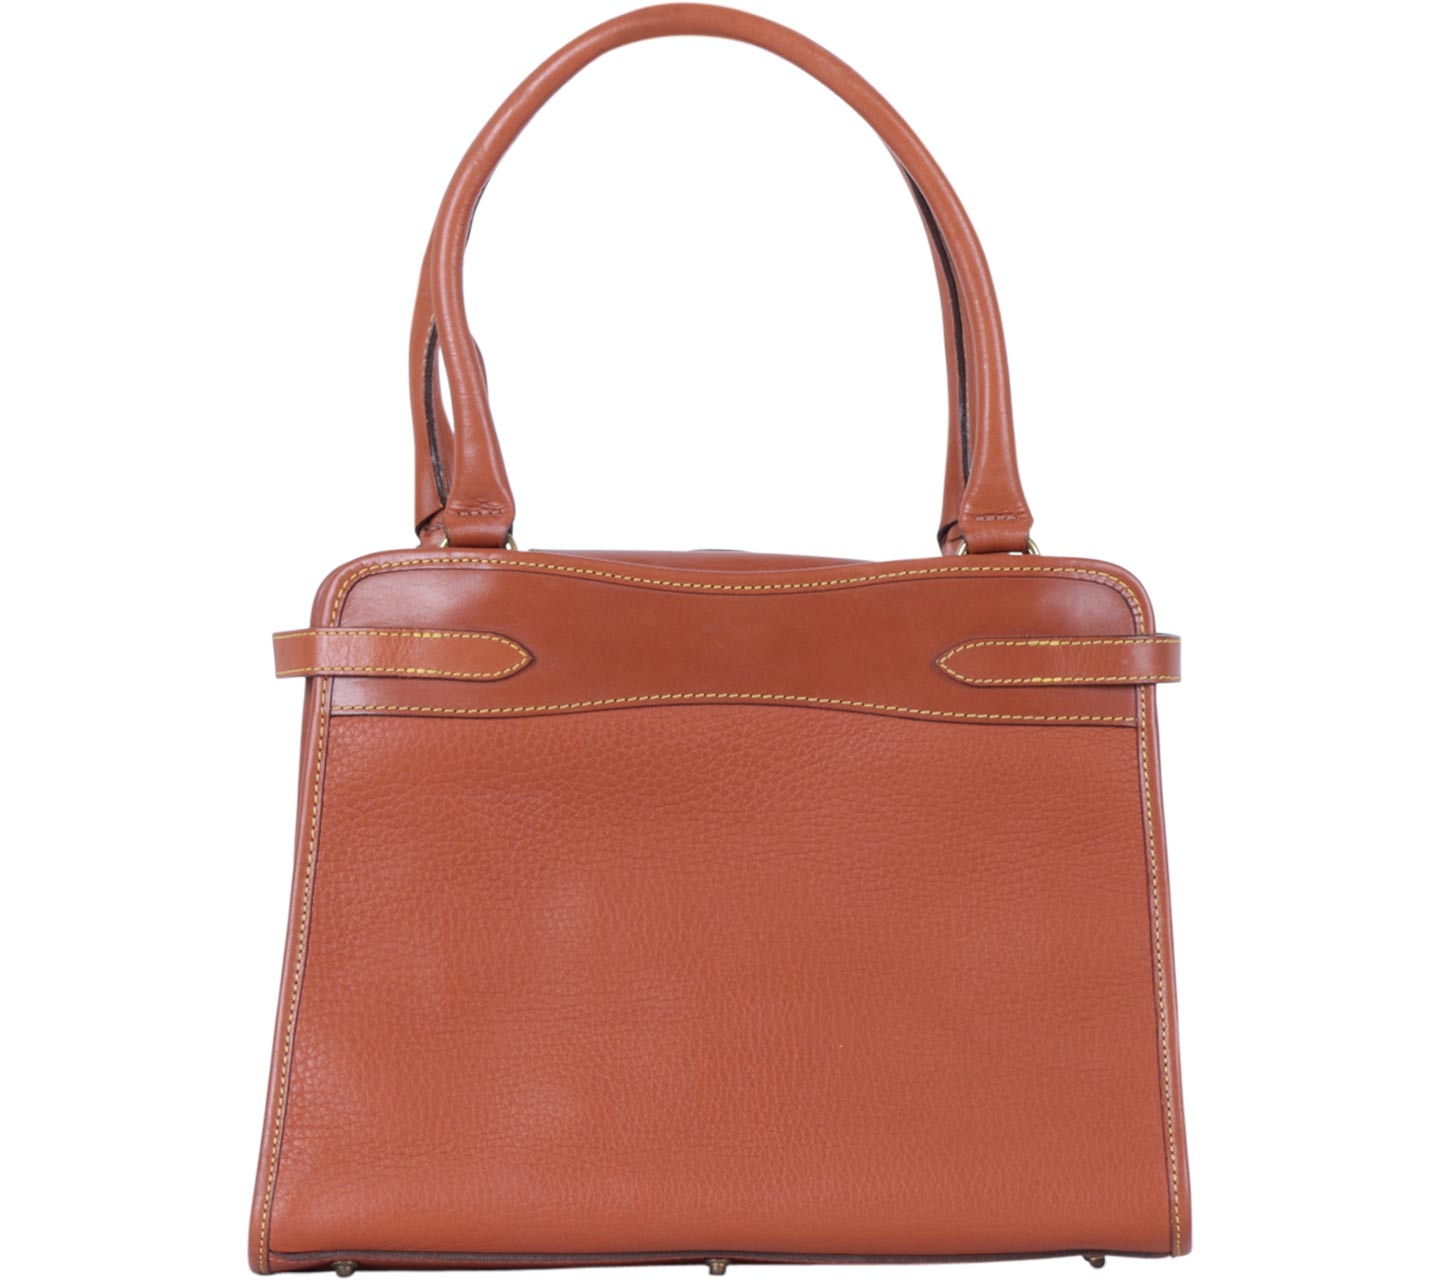 Dooney & Bourke Brown Vintage Handbag